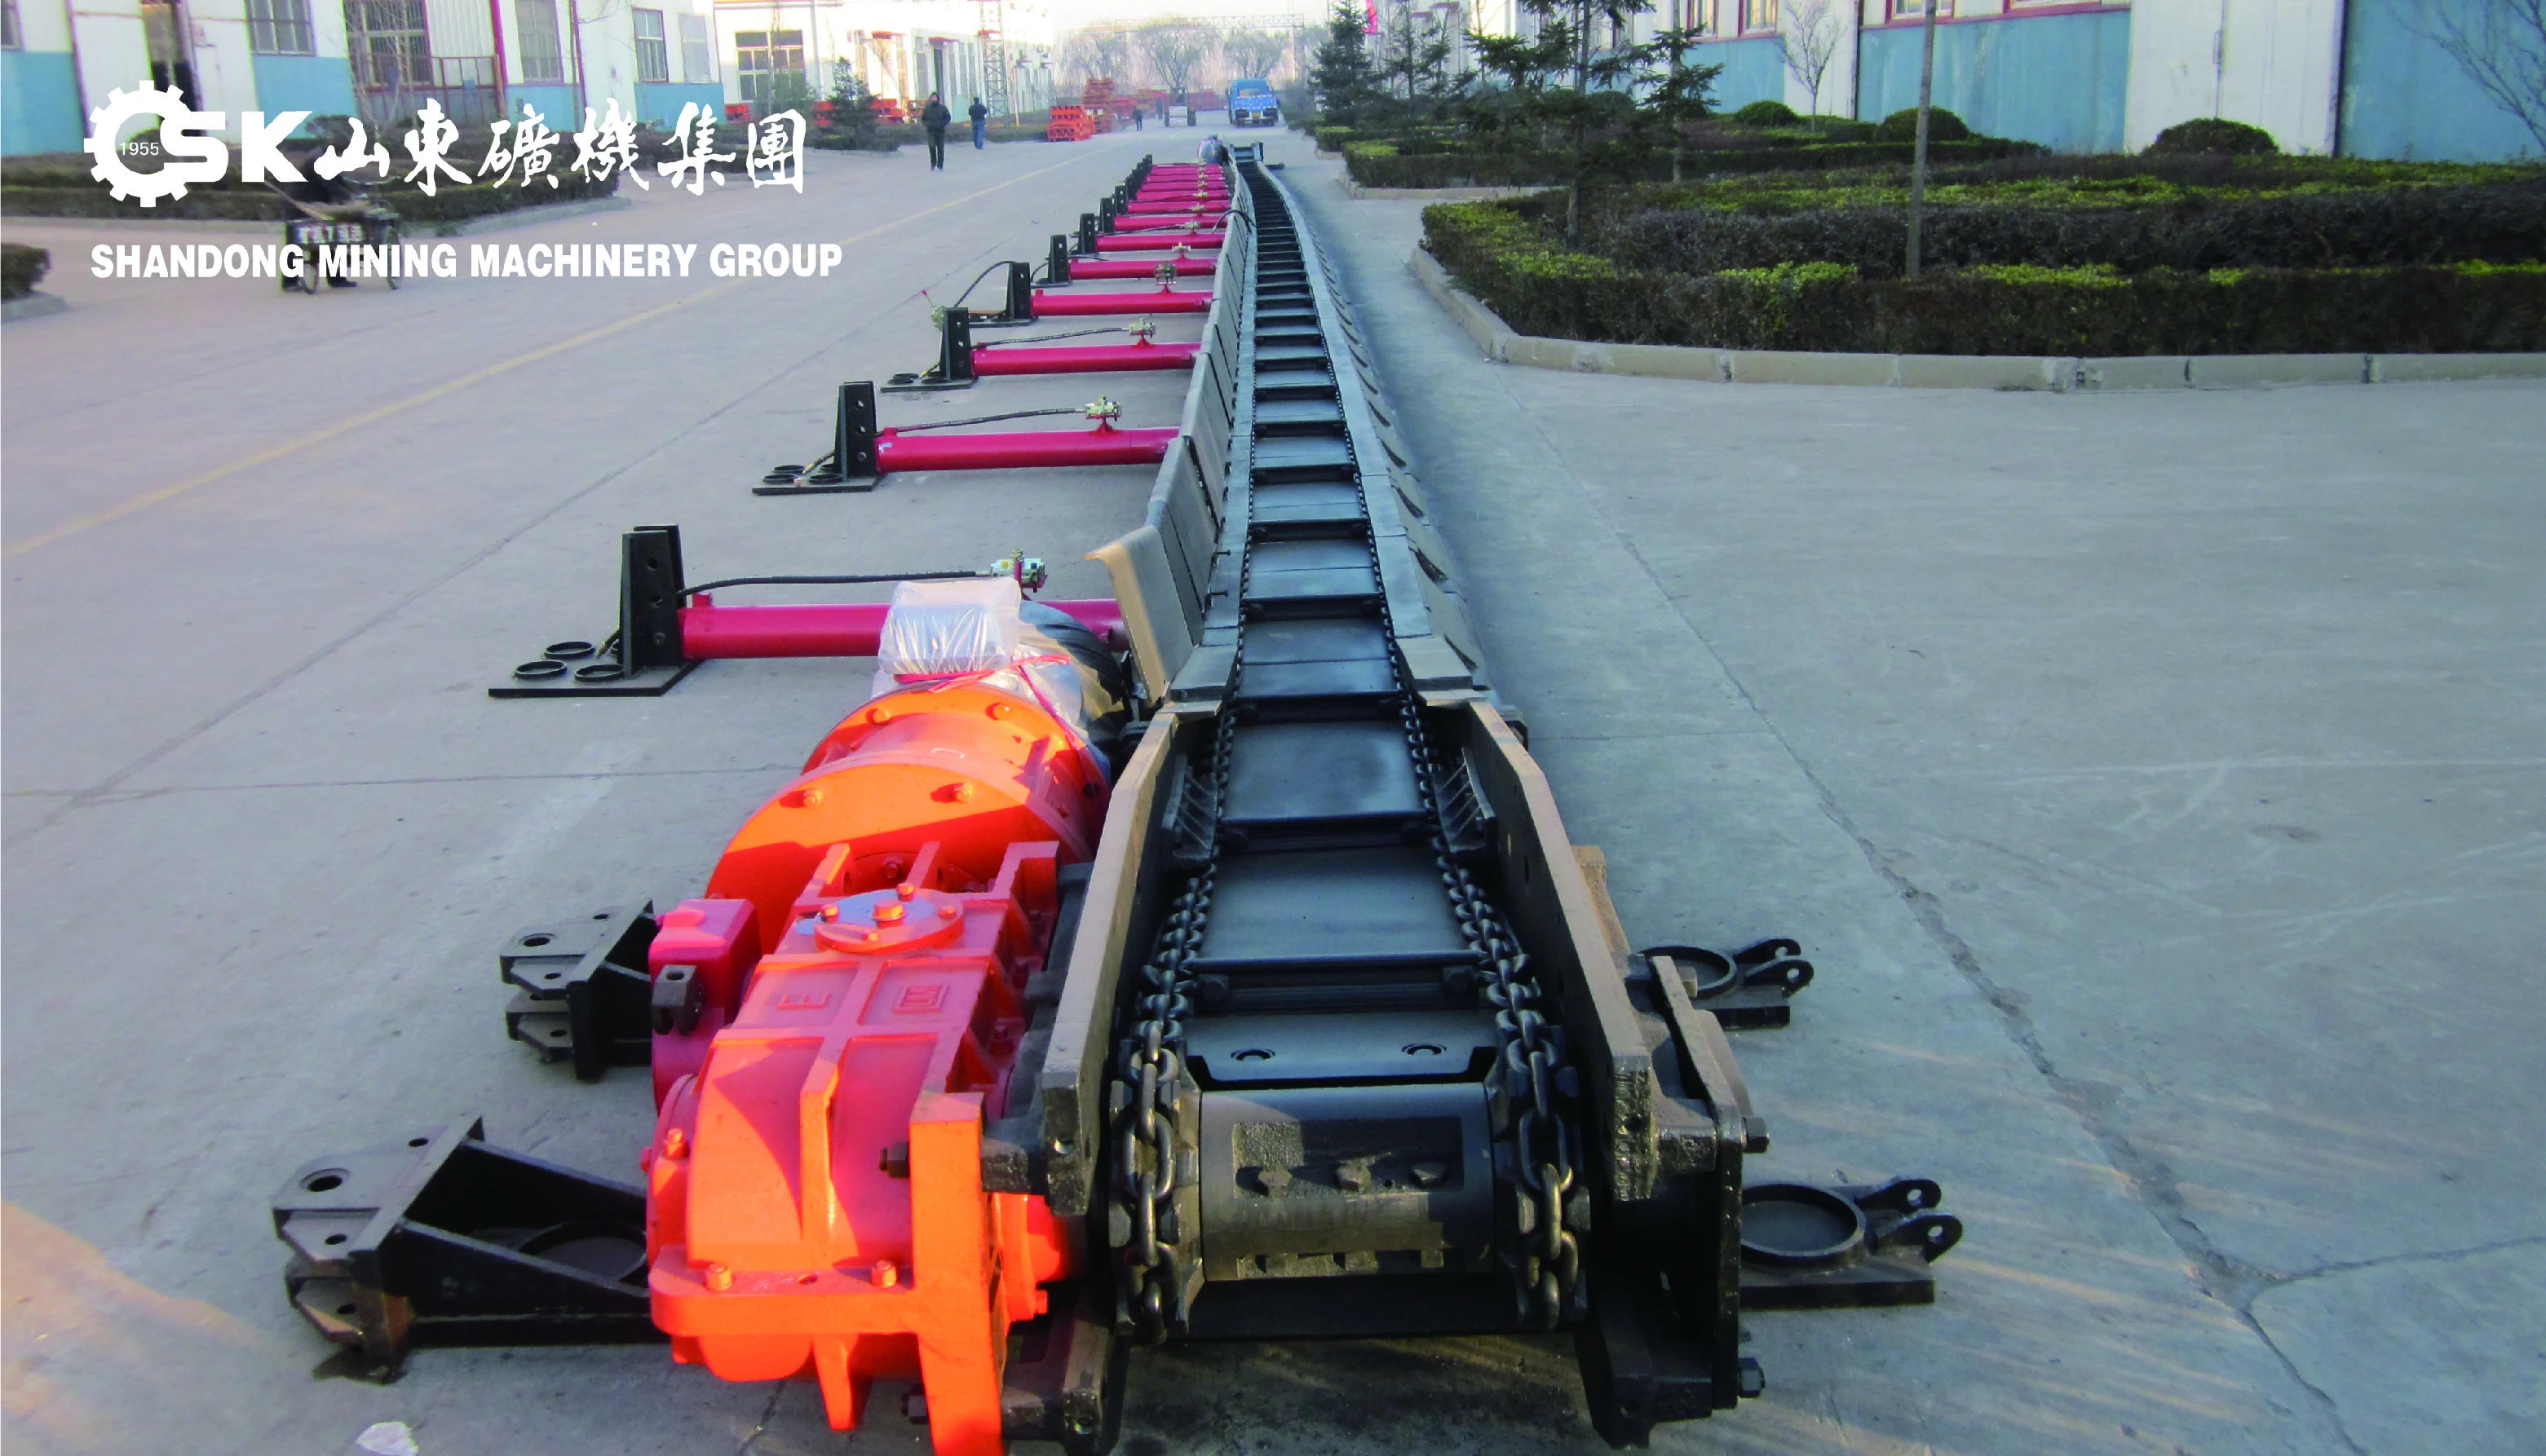 ISO CE horizontal mining equipment. mark 11 sluice scraper for mining machinery parts